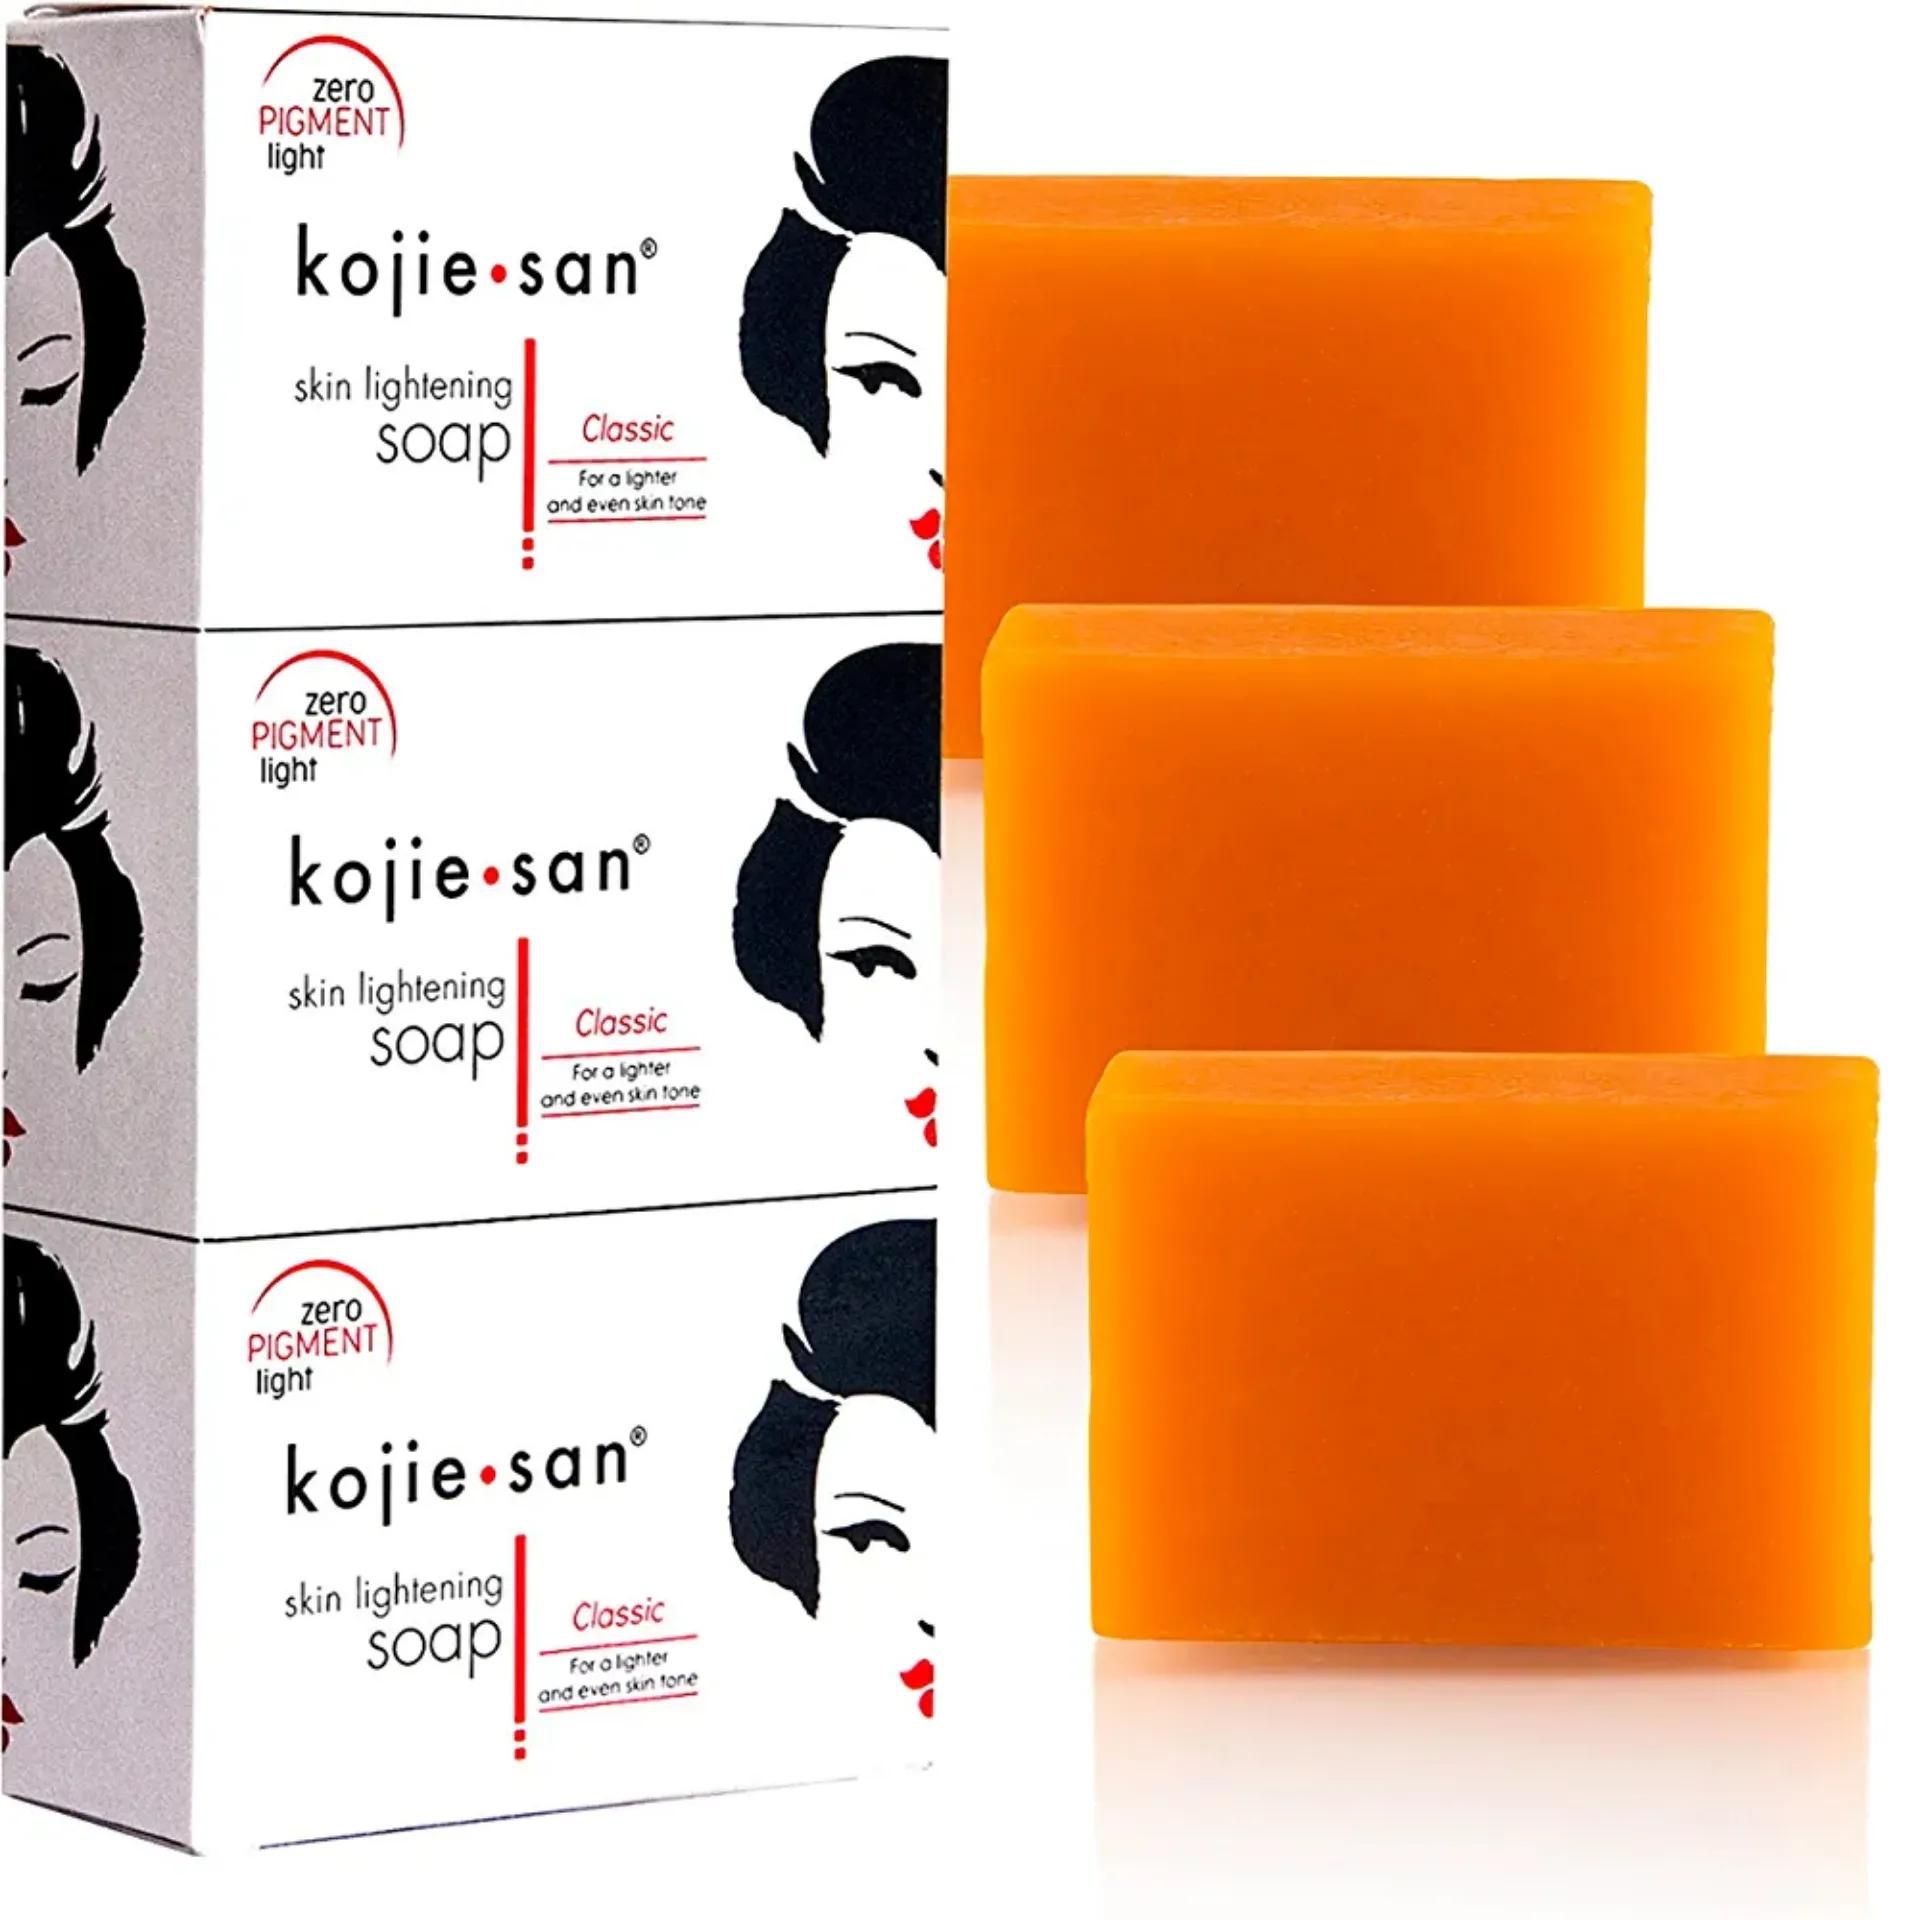 3 PIECES Kojie San Skin Lightening Soap - Original Classic Kojic Acid Soap for Dark Spots, Hyperpigmentation, Whitening & Scars - Beauty Bar with Coconut & Tea Tree Oil for Fair sk